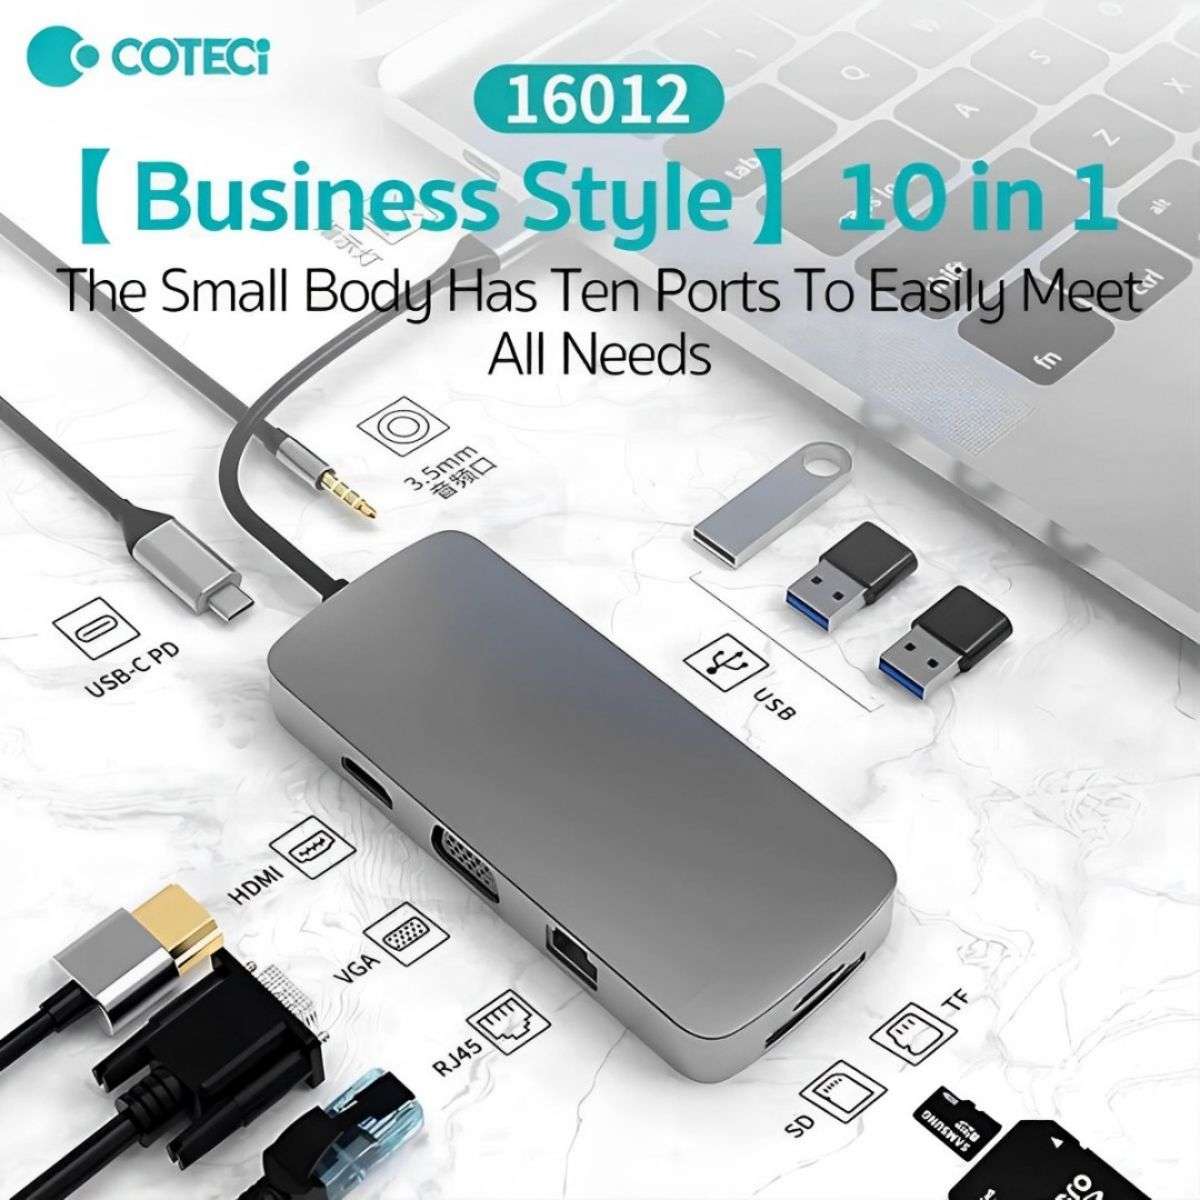 COTECi 10 in 1 USB-C HUB Multiport Adapter - 16012